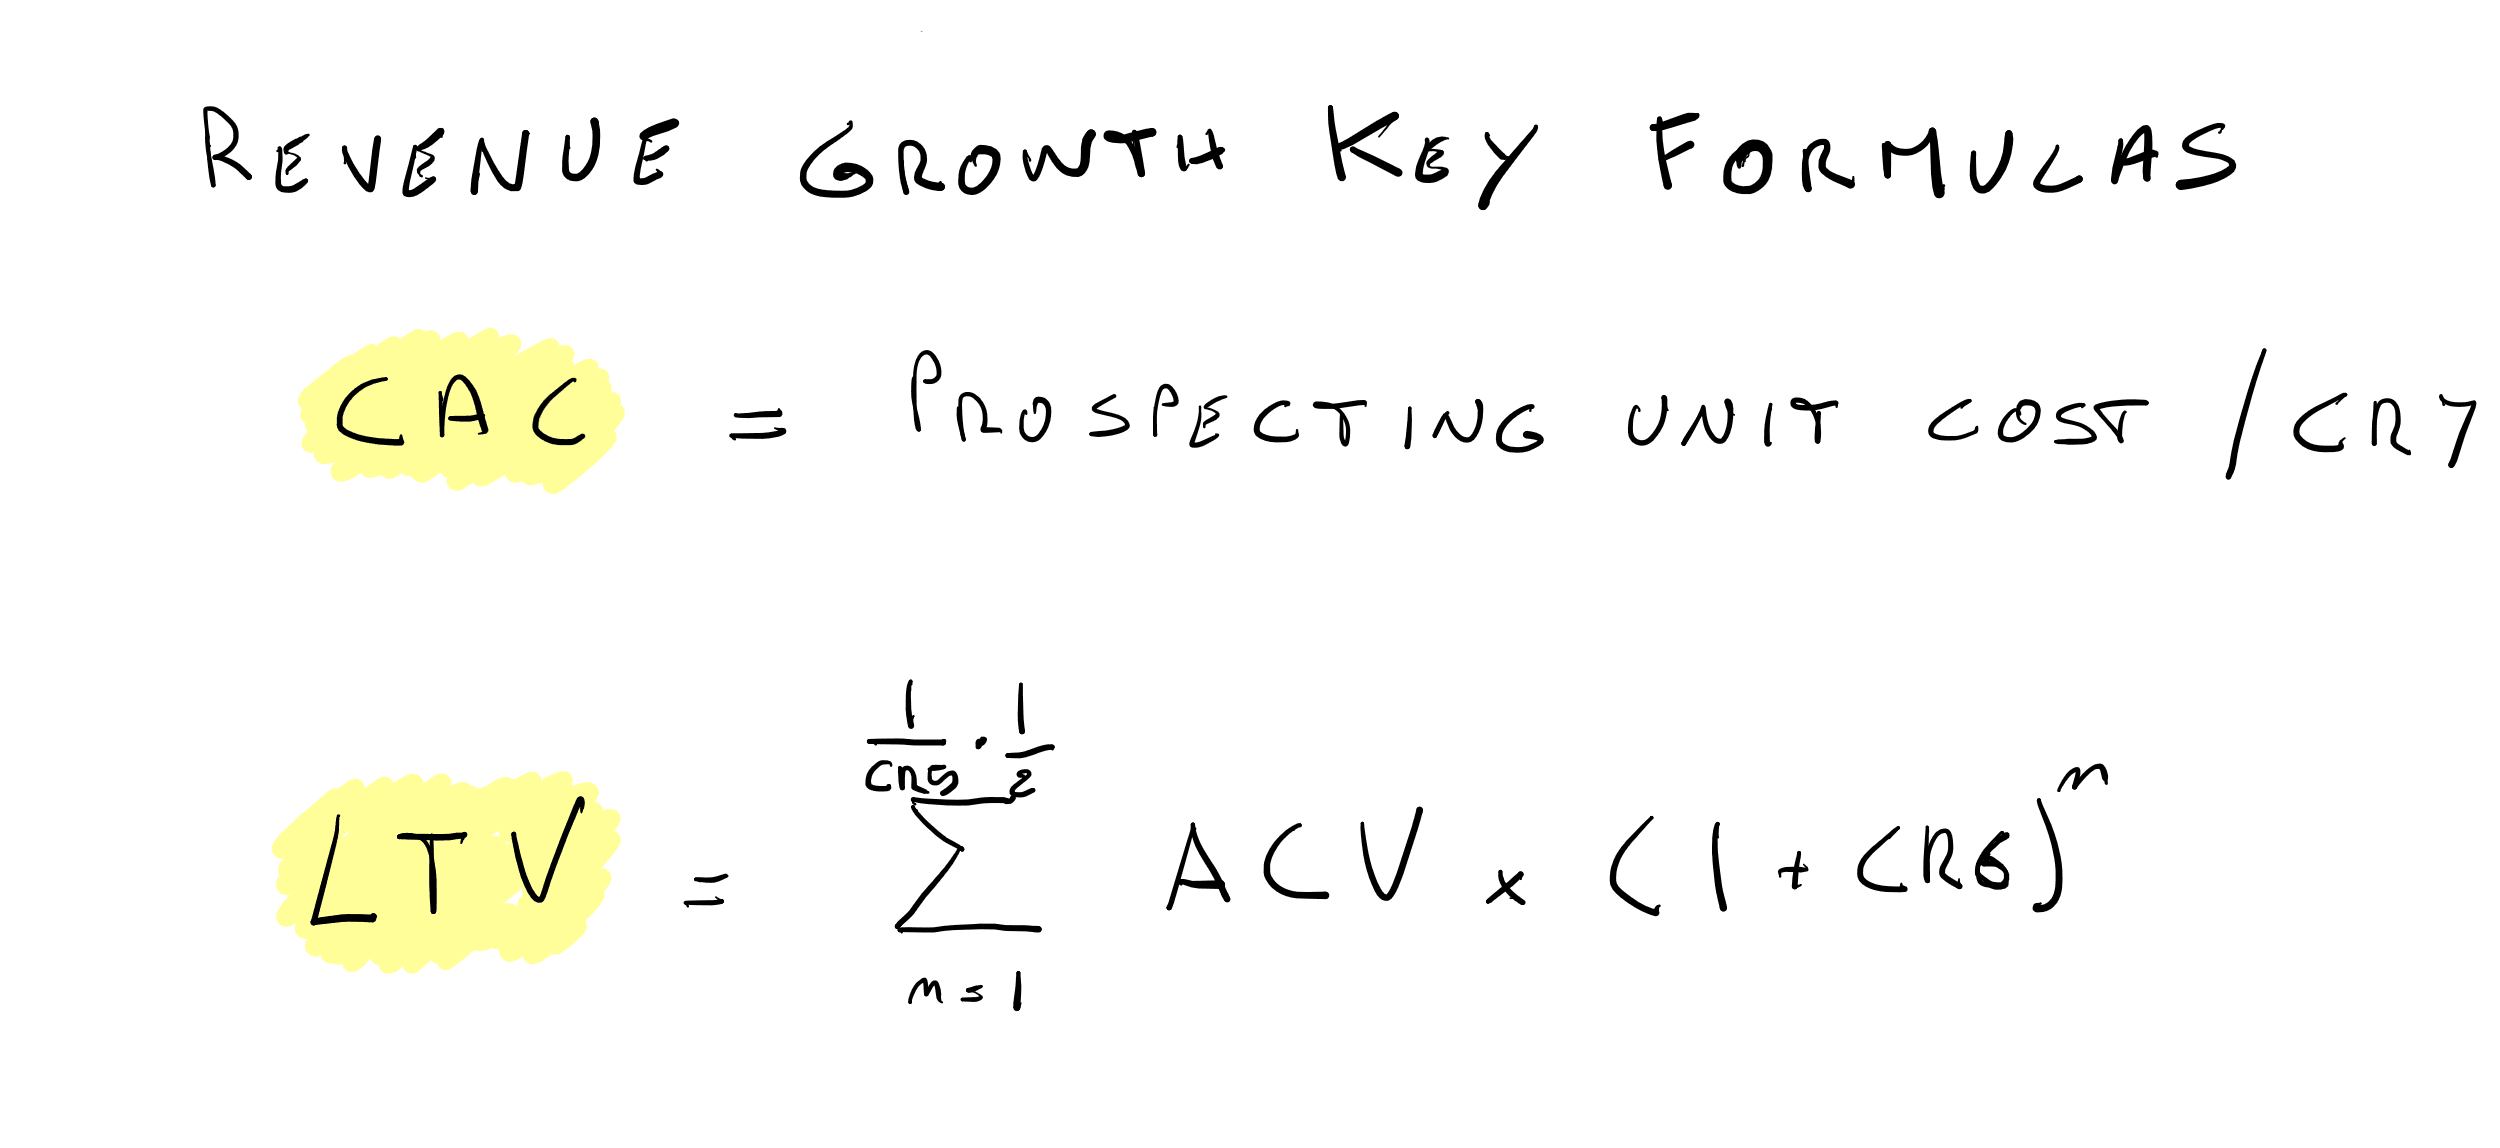 Revenue Growth Key Formulas